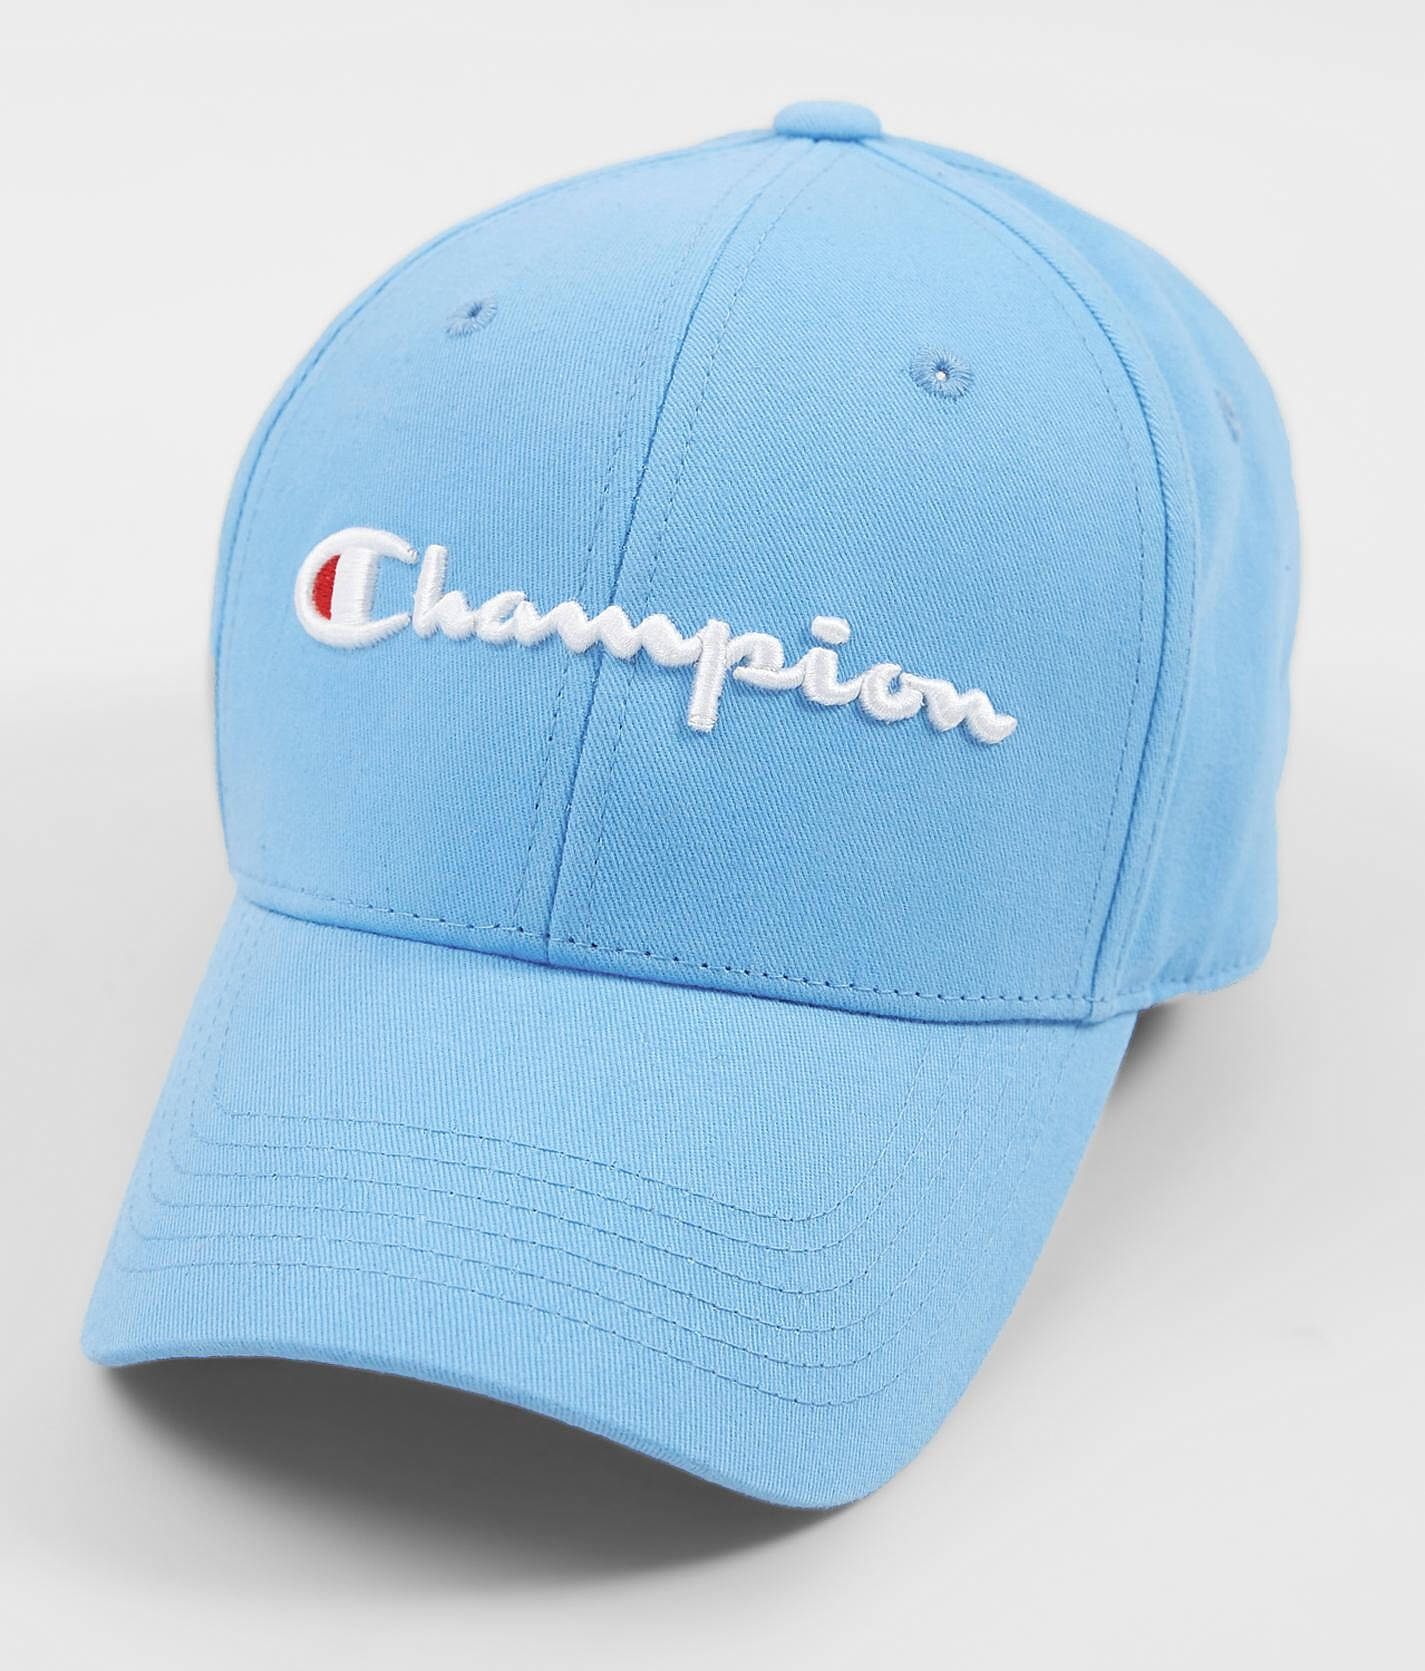 men's champion hats